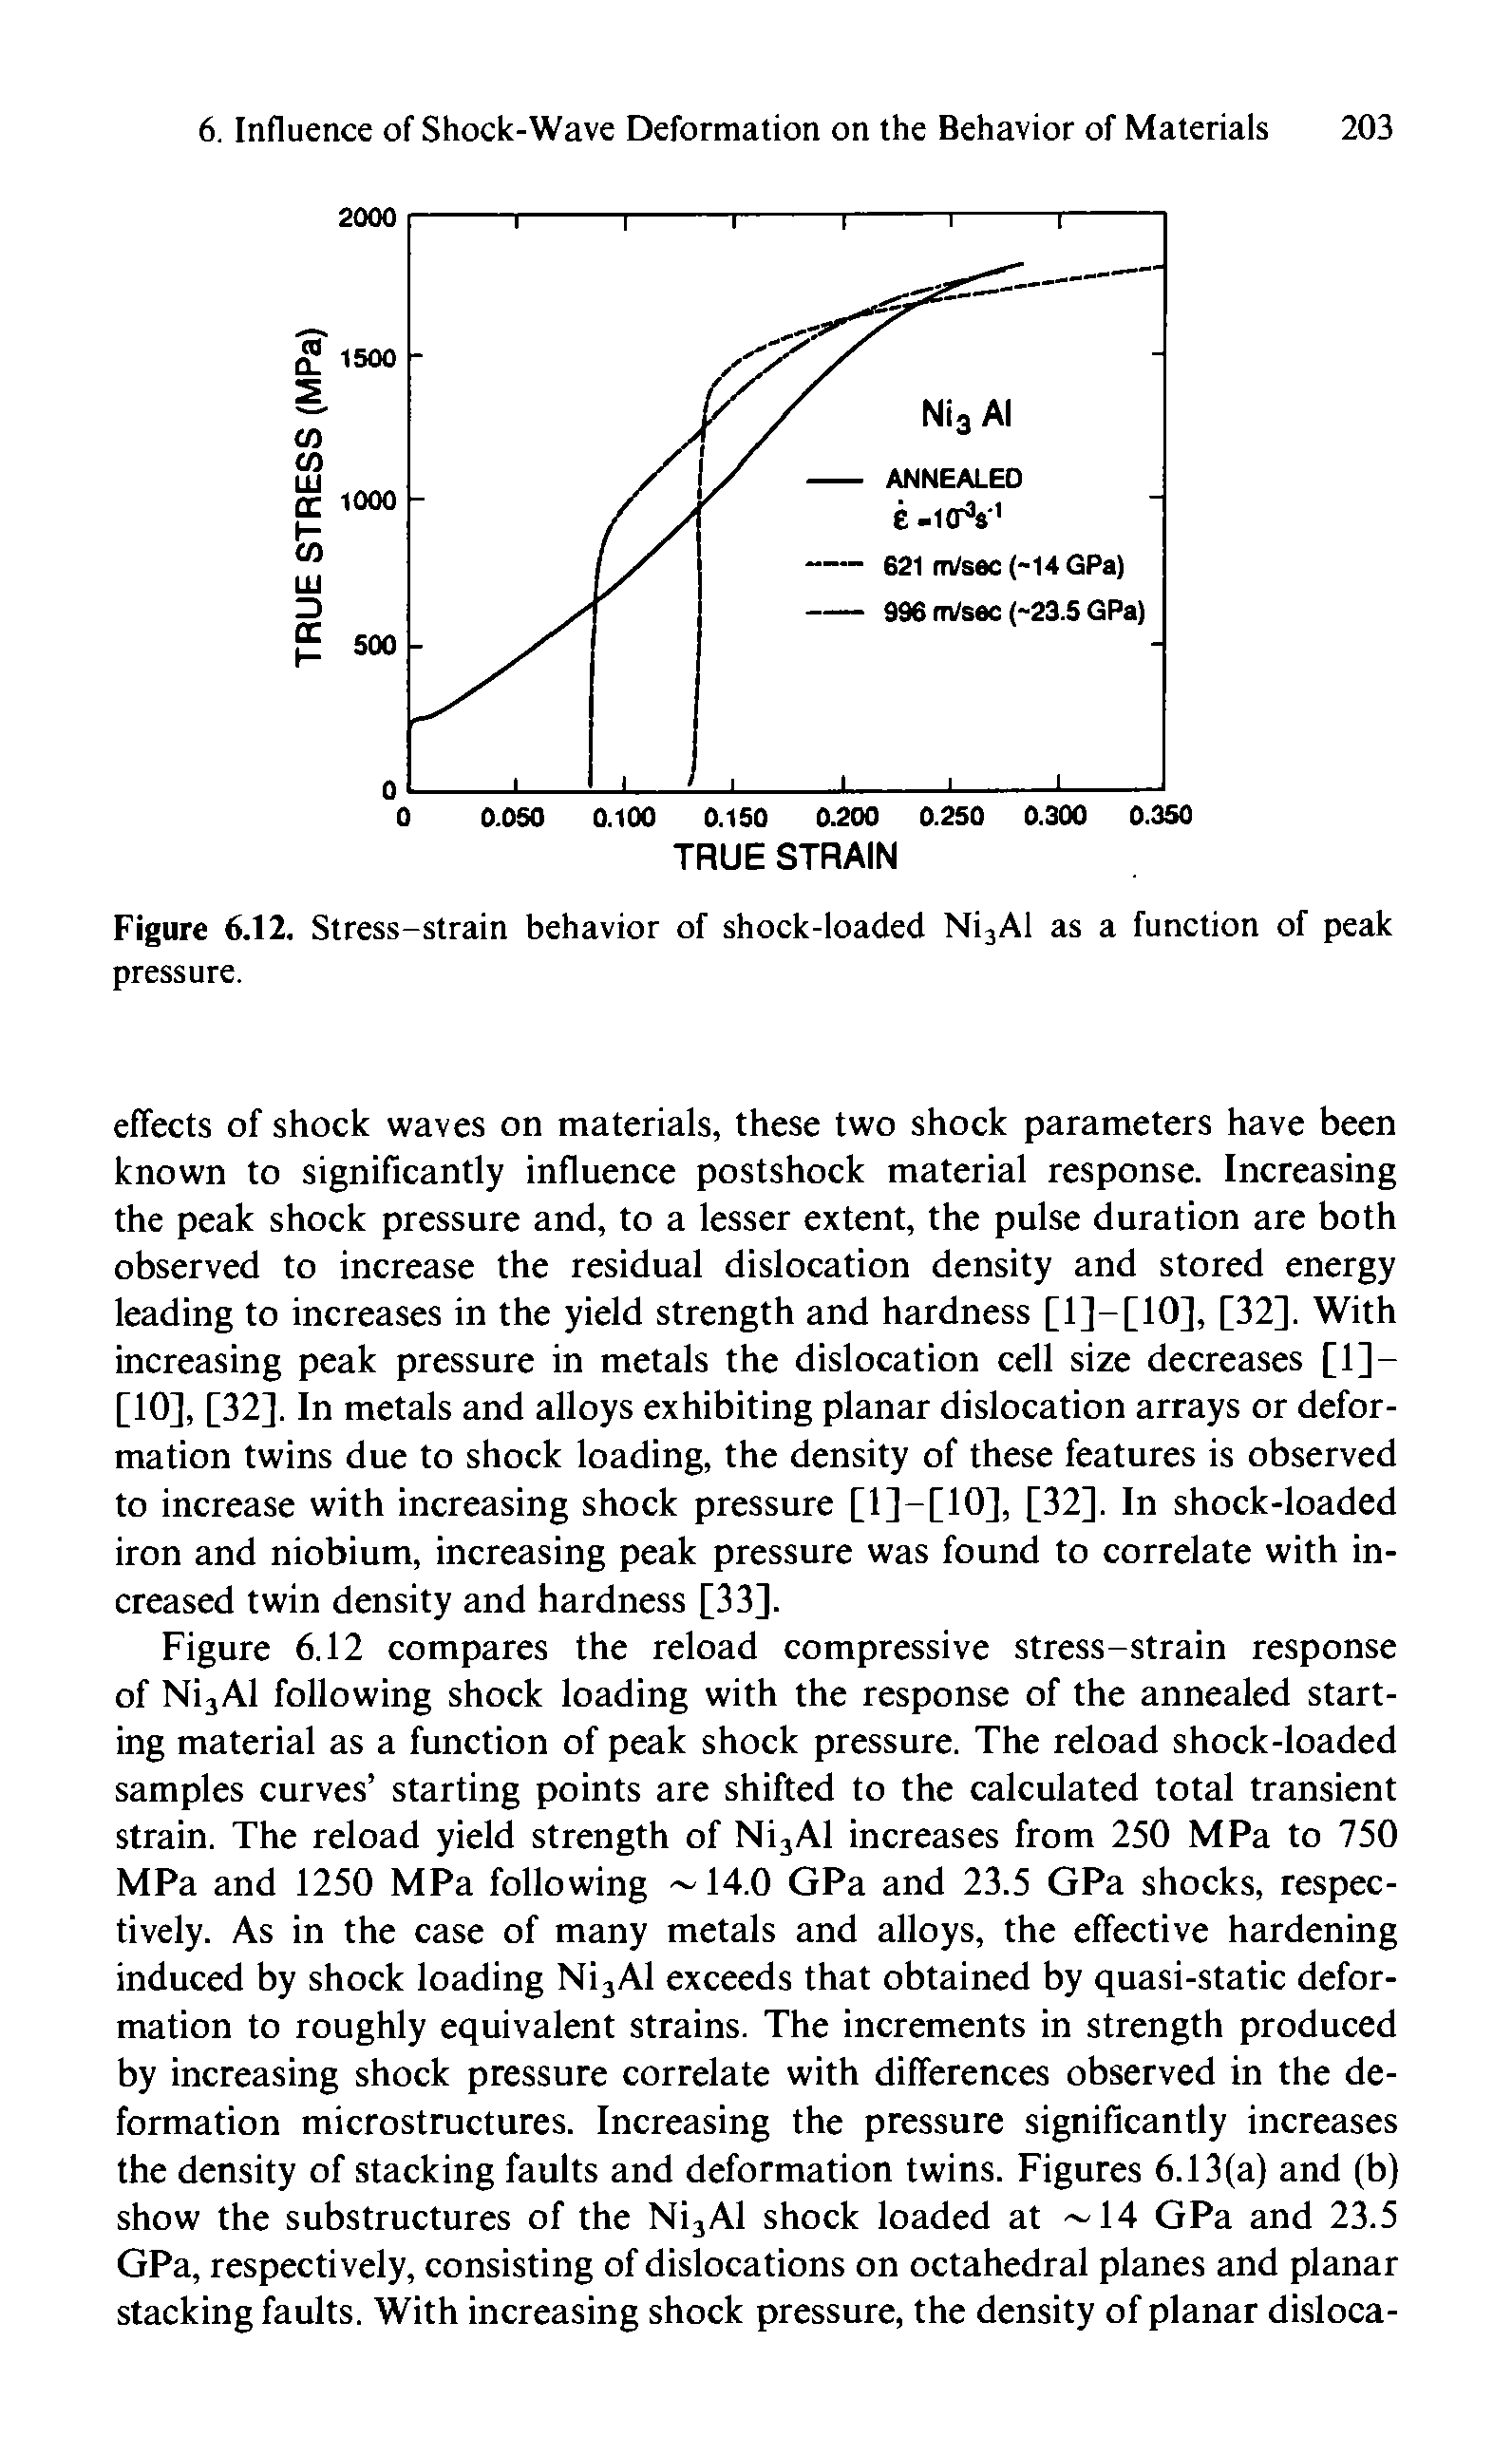 Figure 6.12. Stress-strain behavior of shoek-loaded NijAl as a funetion of peak pressure.